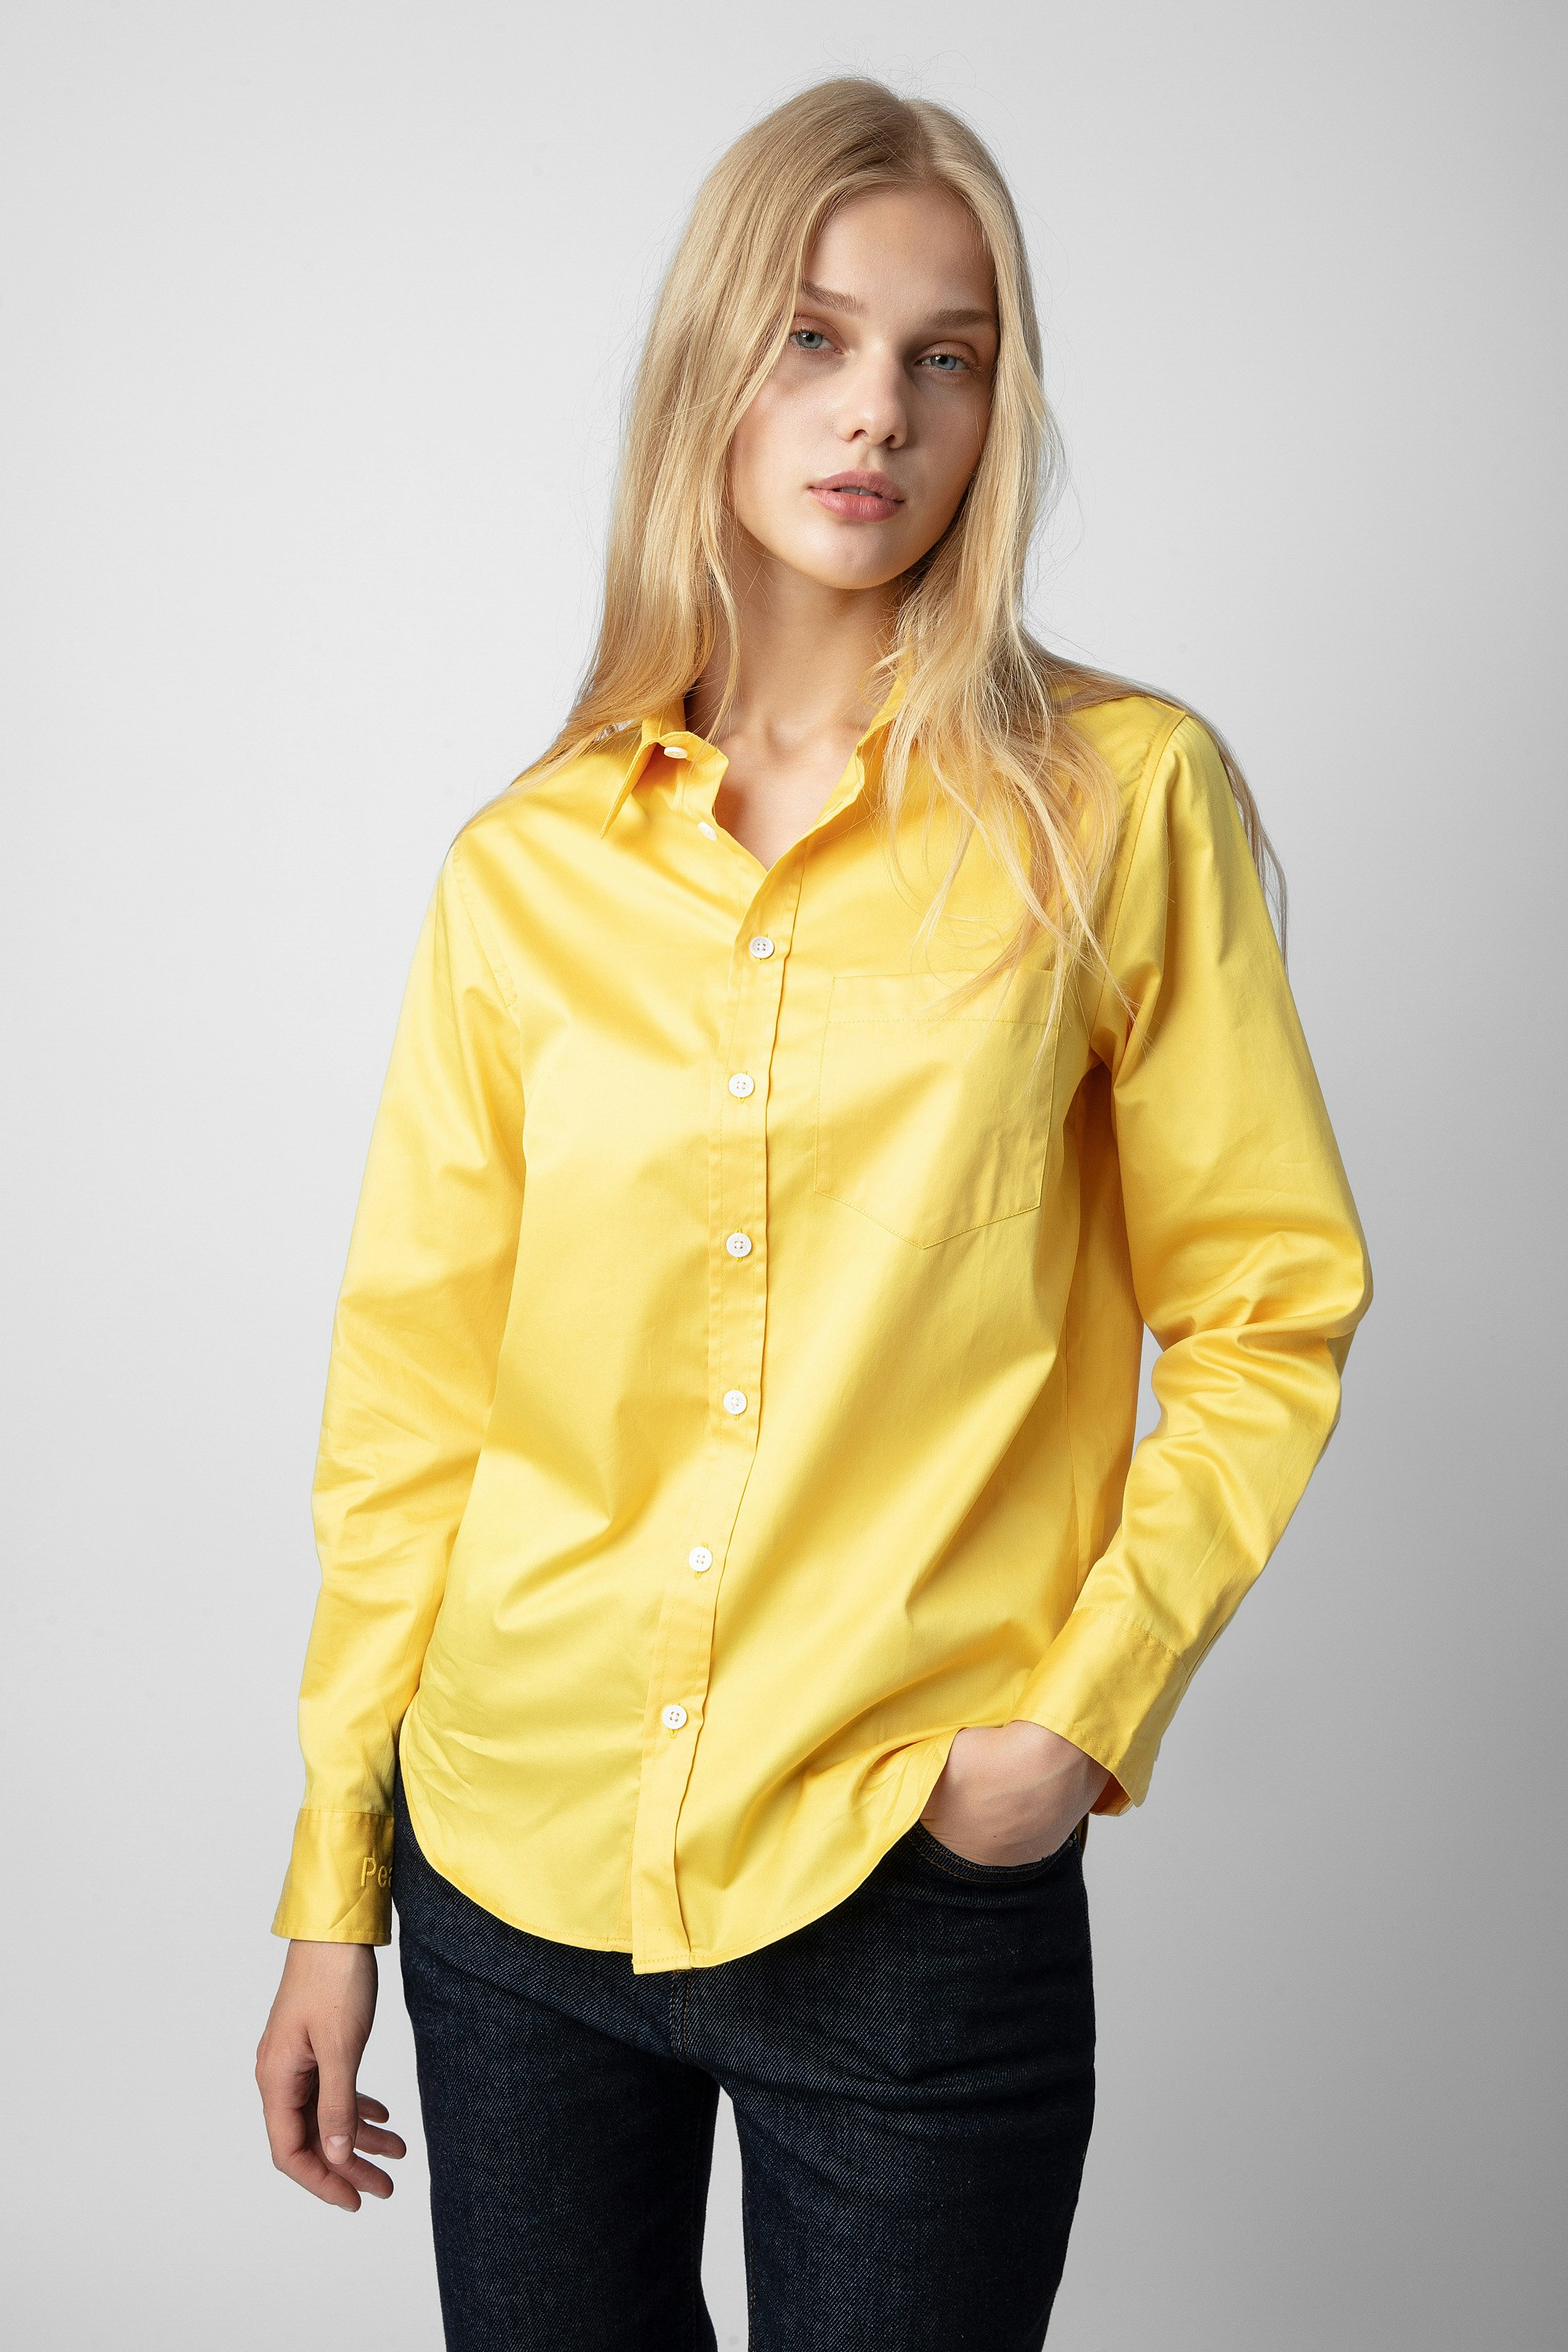 Taskiz Shirt - Women's yellow cotton shirt with "Peace" embroidery on left sleeve.